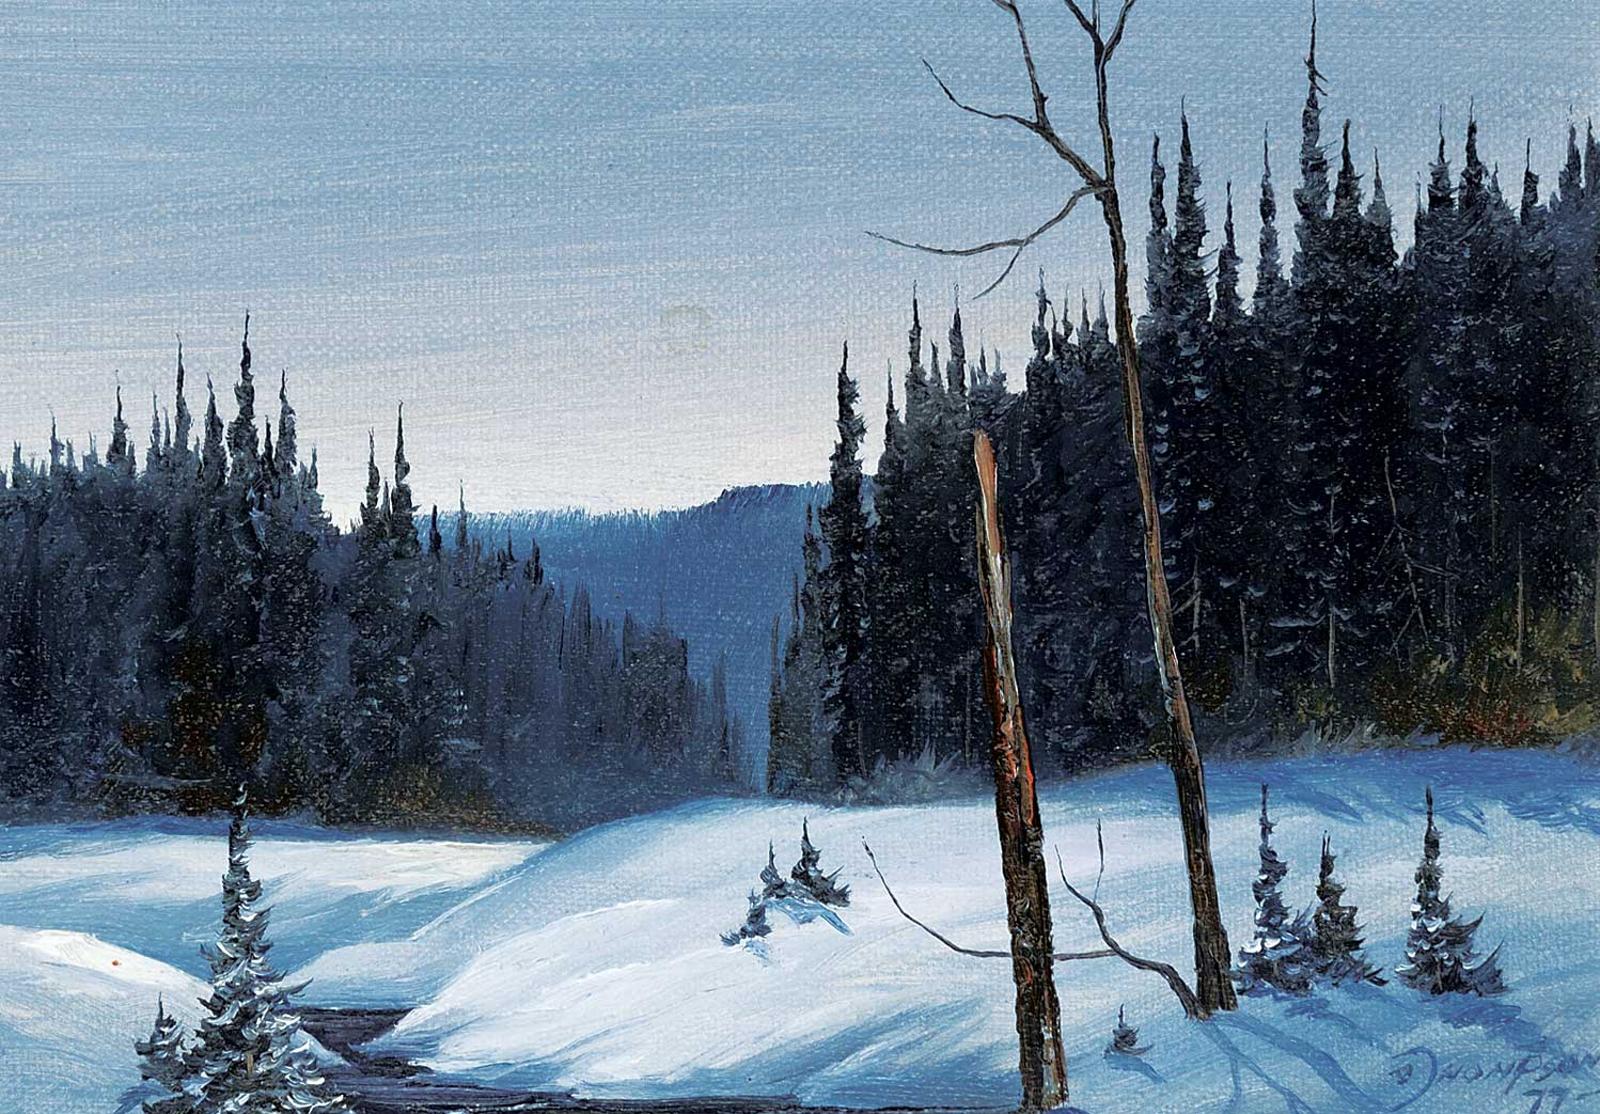 Allan Robert Thompson (1949) - Untitled - Stream in Winter